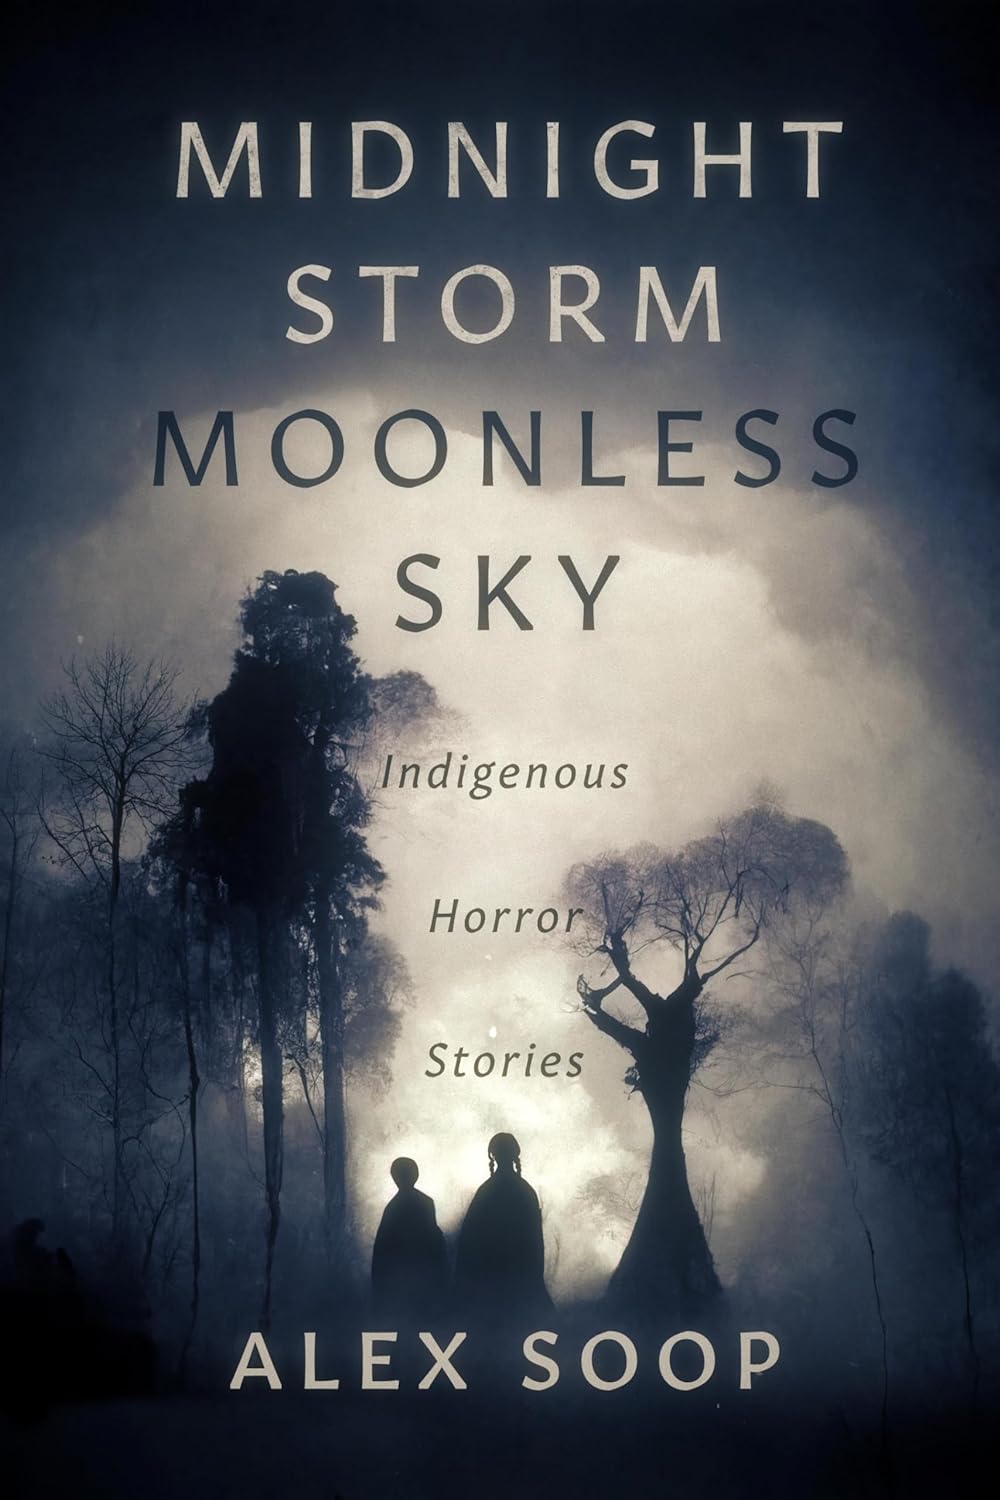 Midnight Storm Moonless Sky: Indigenous Horror Stories by Alex Soop